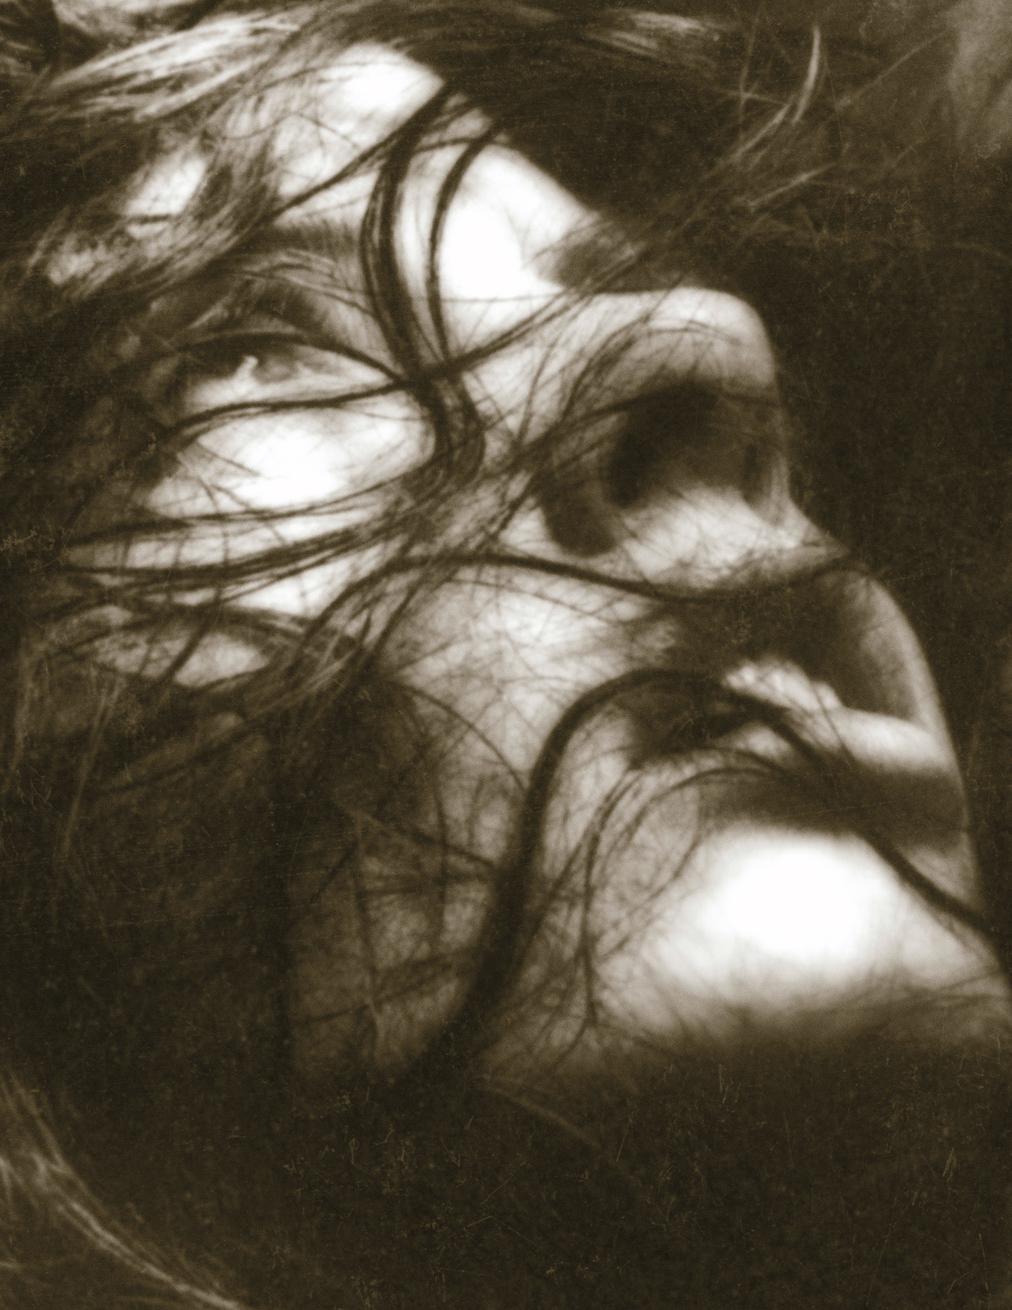 Albert WATSON (*1942, Scotland)
Patty Owen, New York City, 1986
Chromogenic print from a polaroid positive face mounted to acrylic (Diasec)
Sheet 238 x 182.5 cm (93 3/4 x 71 7/8 in.)
Frame 239 x 183.5 x 10 cm (94 1/8 x 72 1/4 x 3 7/8 in.)
Framed in